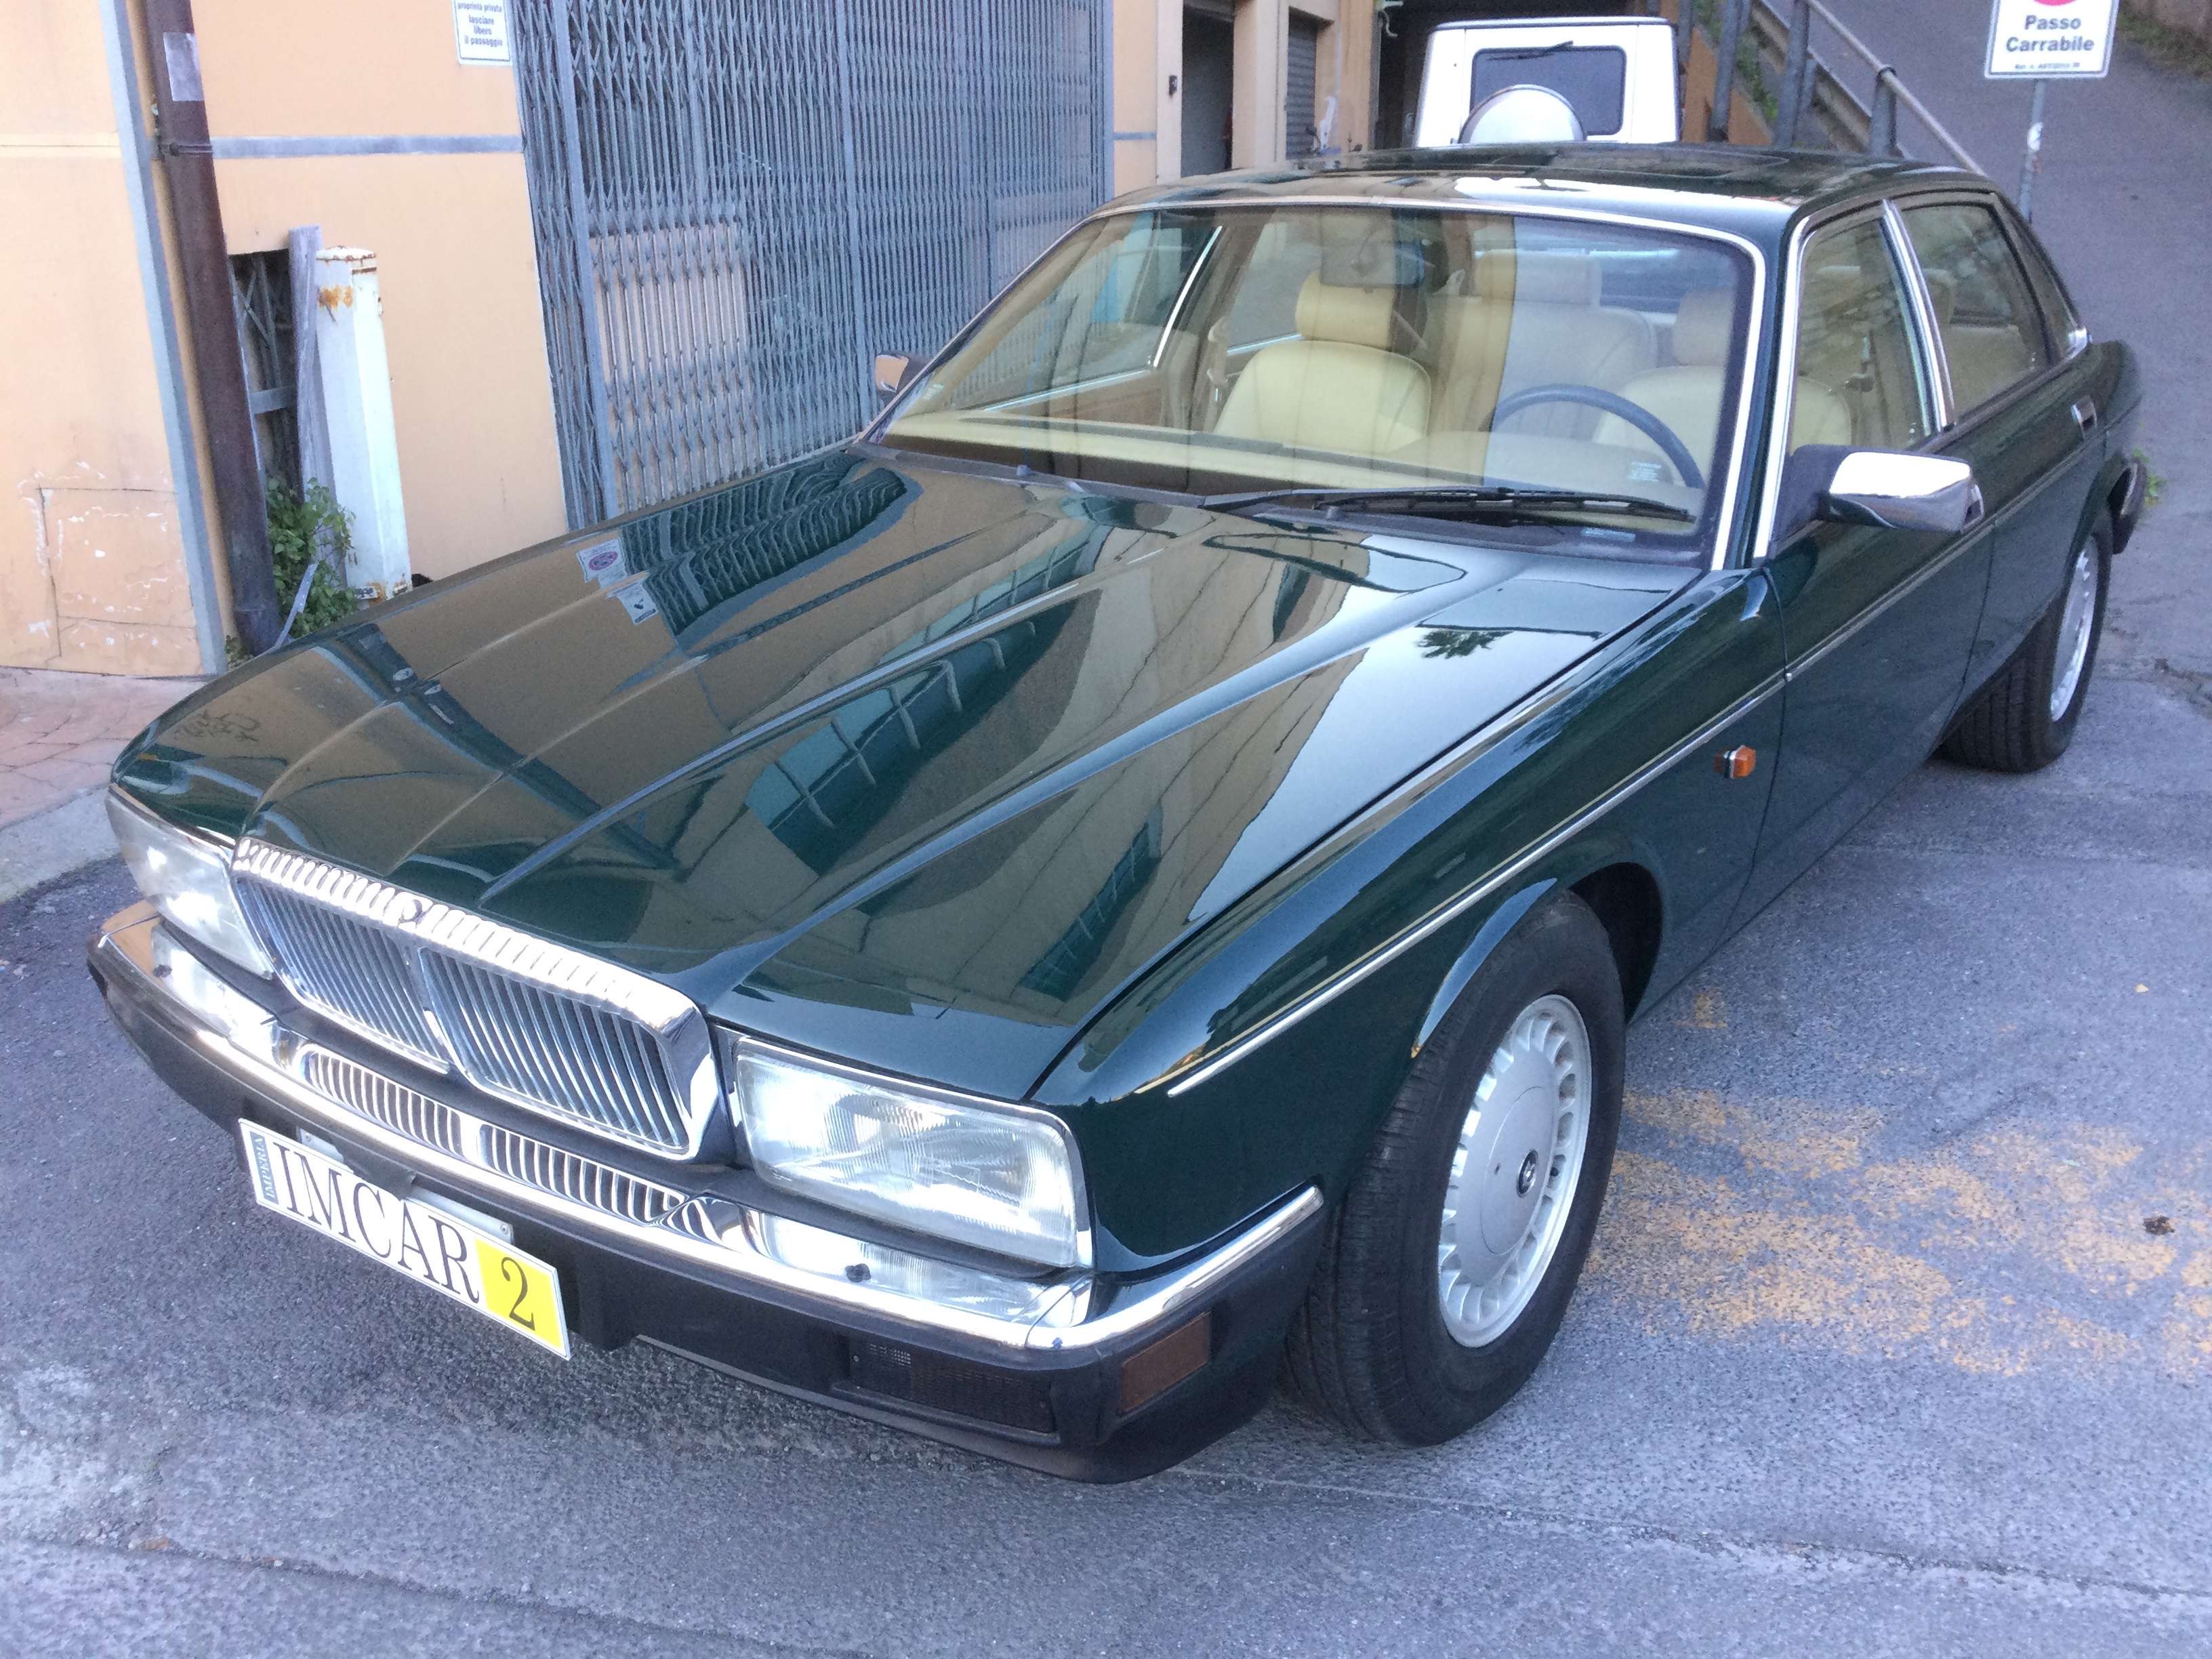 Daimler Six Sedan in Green antique / classic in Imperia - Im for € 13,500.-